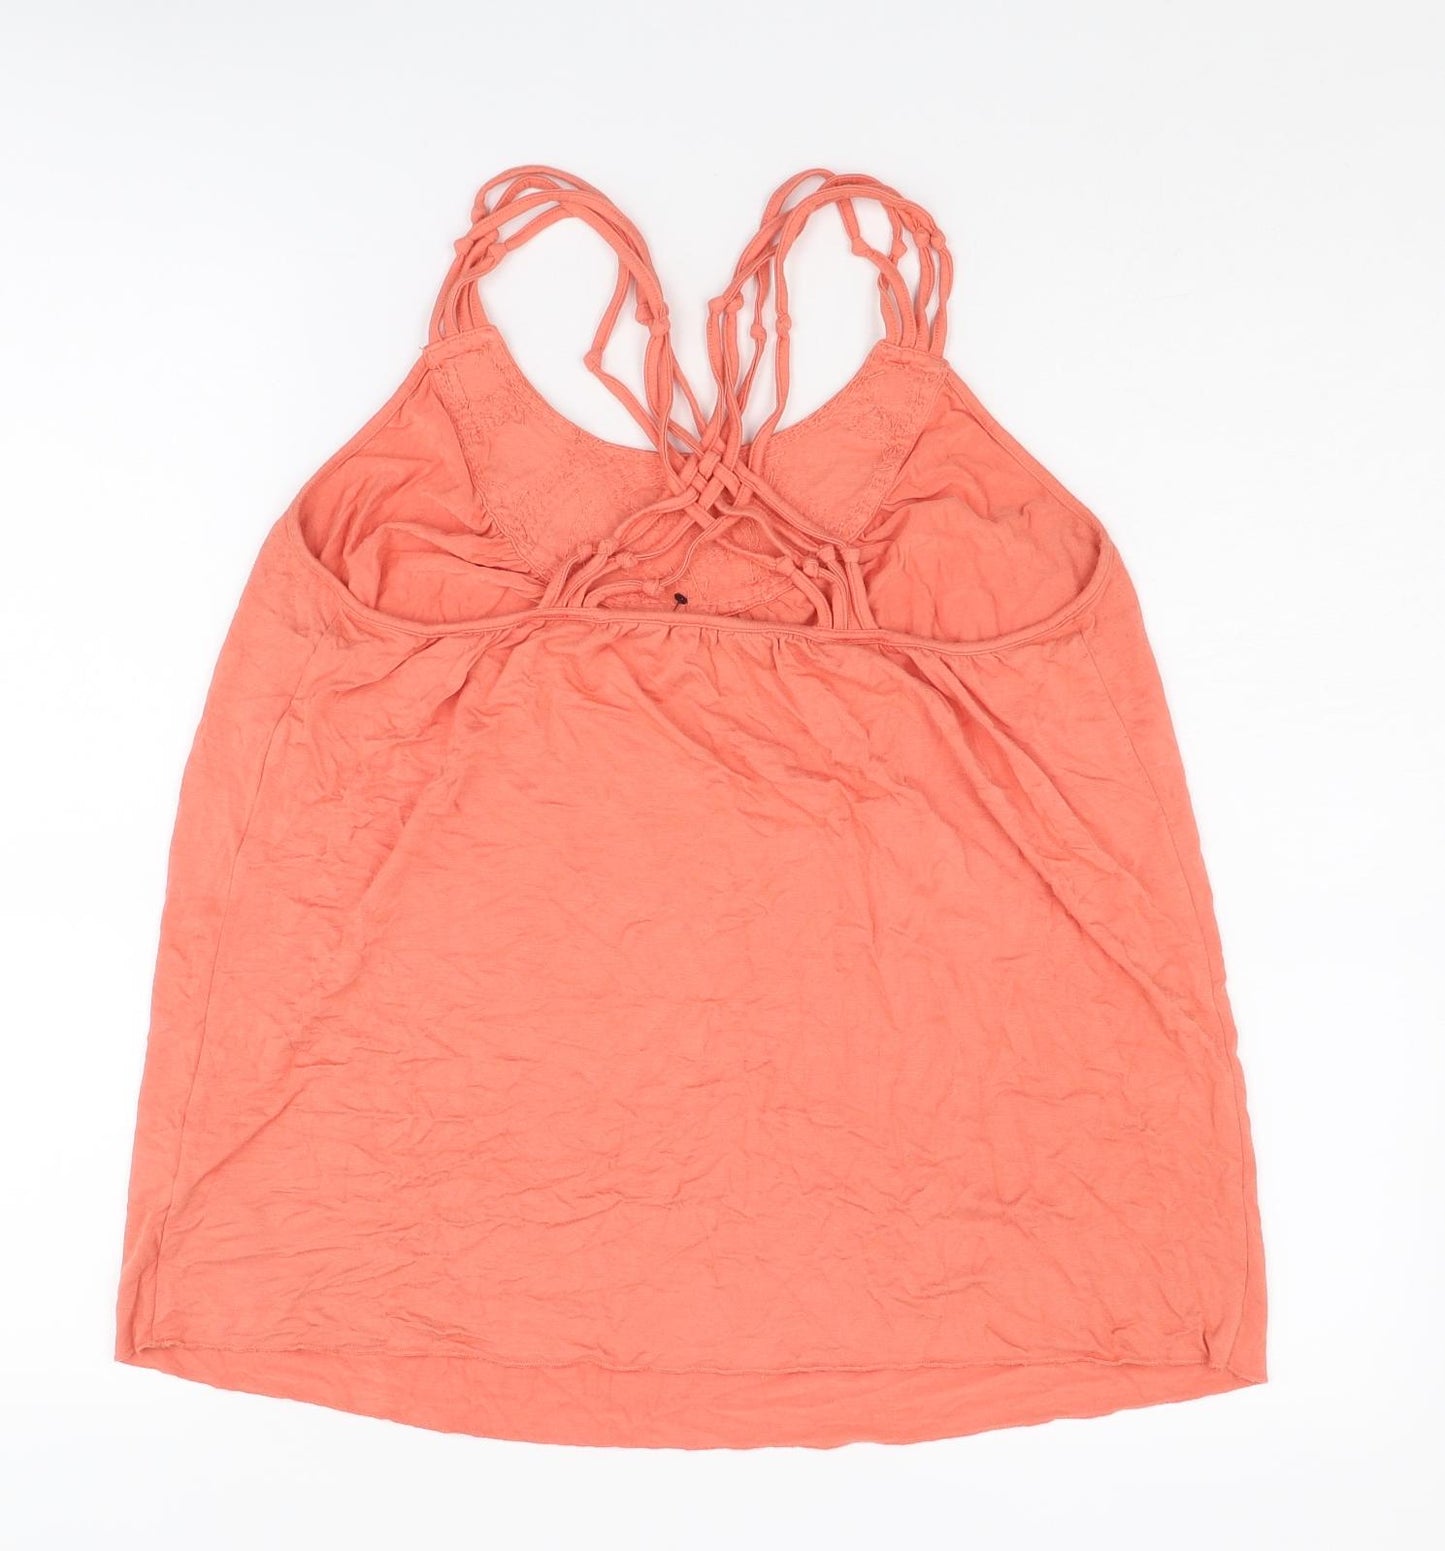 Jasper Conran Womens Orange Cotton Basic Tank Size 16 Round Neck